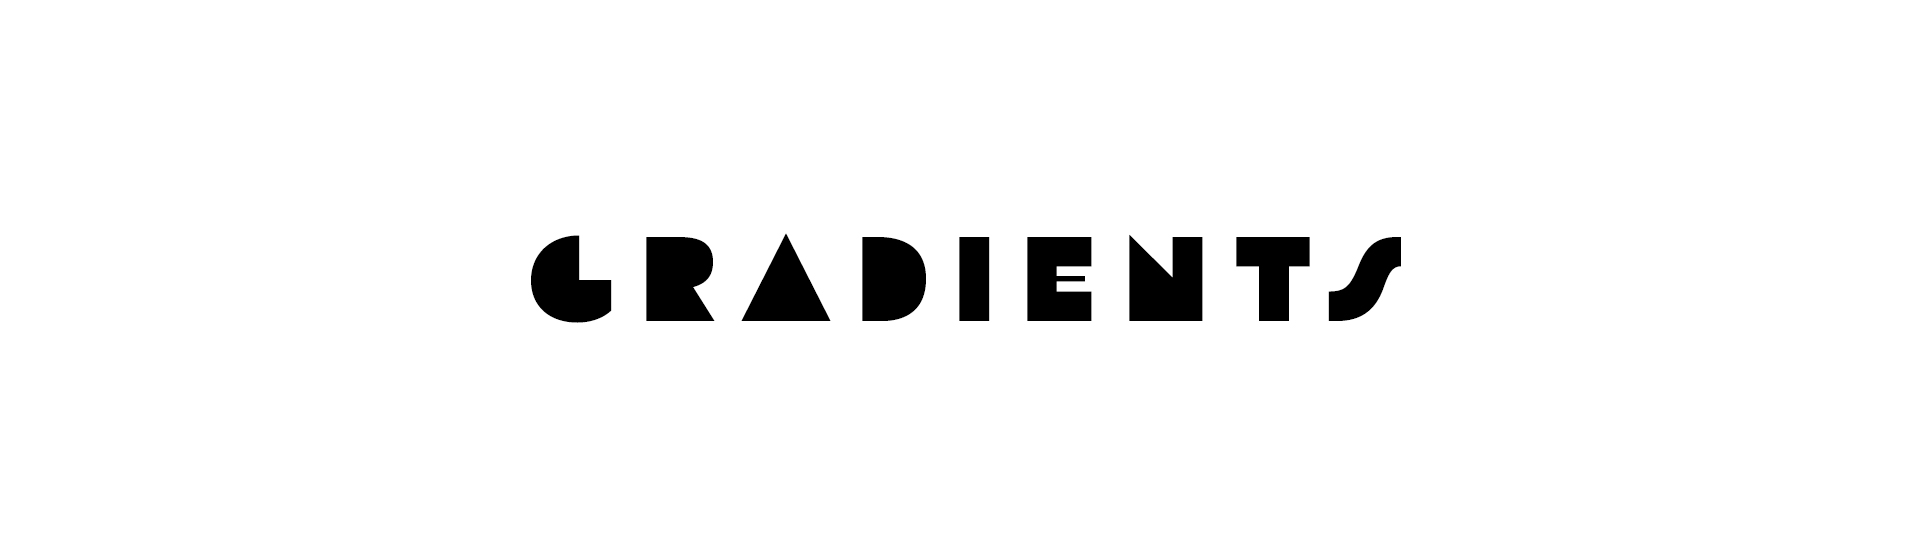 Gradients Logo